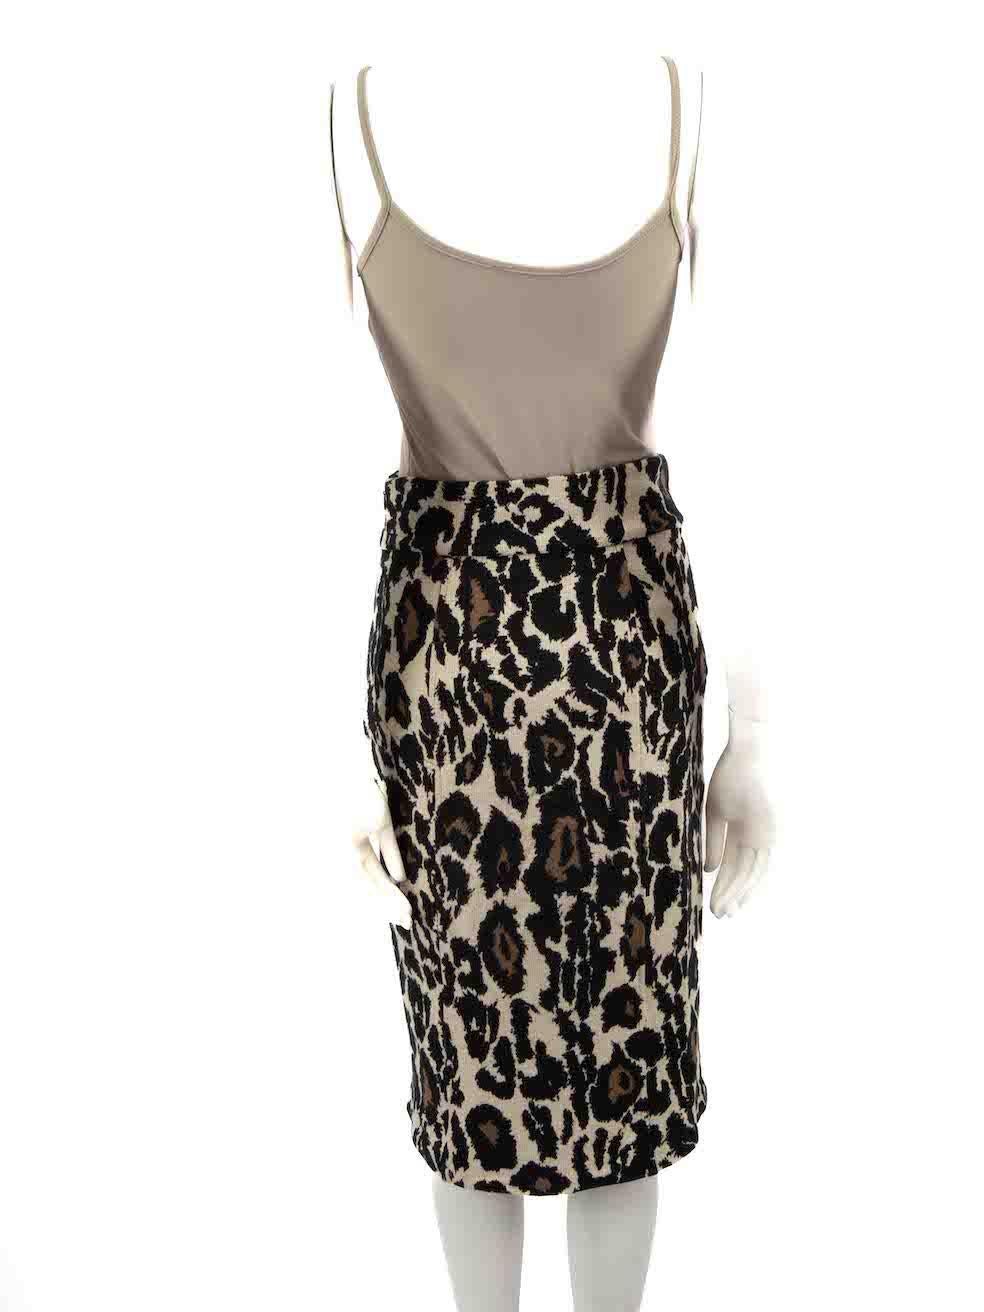 Diane Von Furstenberg Brown Leopard Pencil Skirt Size S In Good Condition For Sale In London, GB